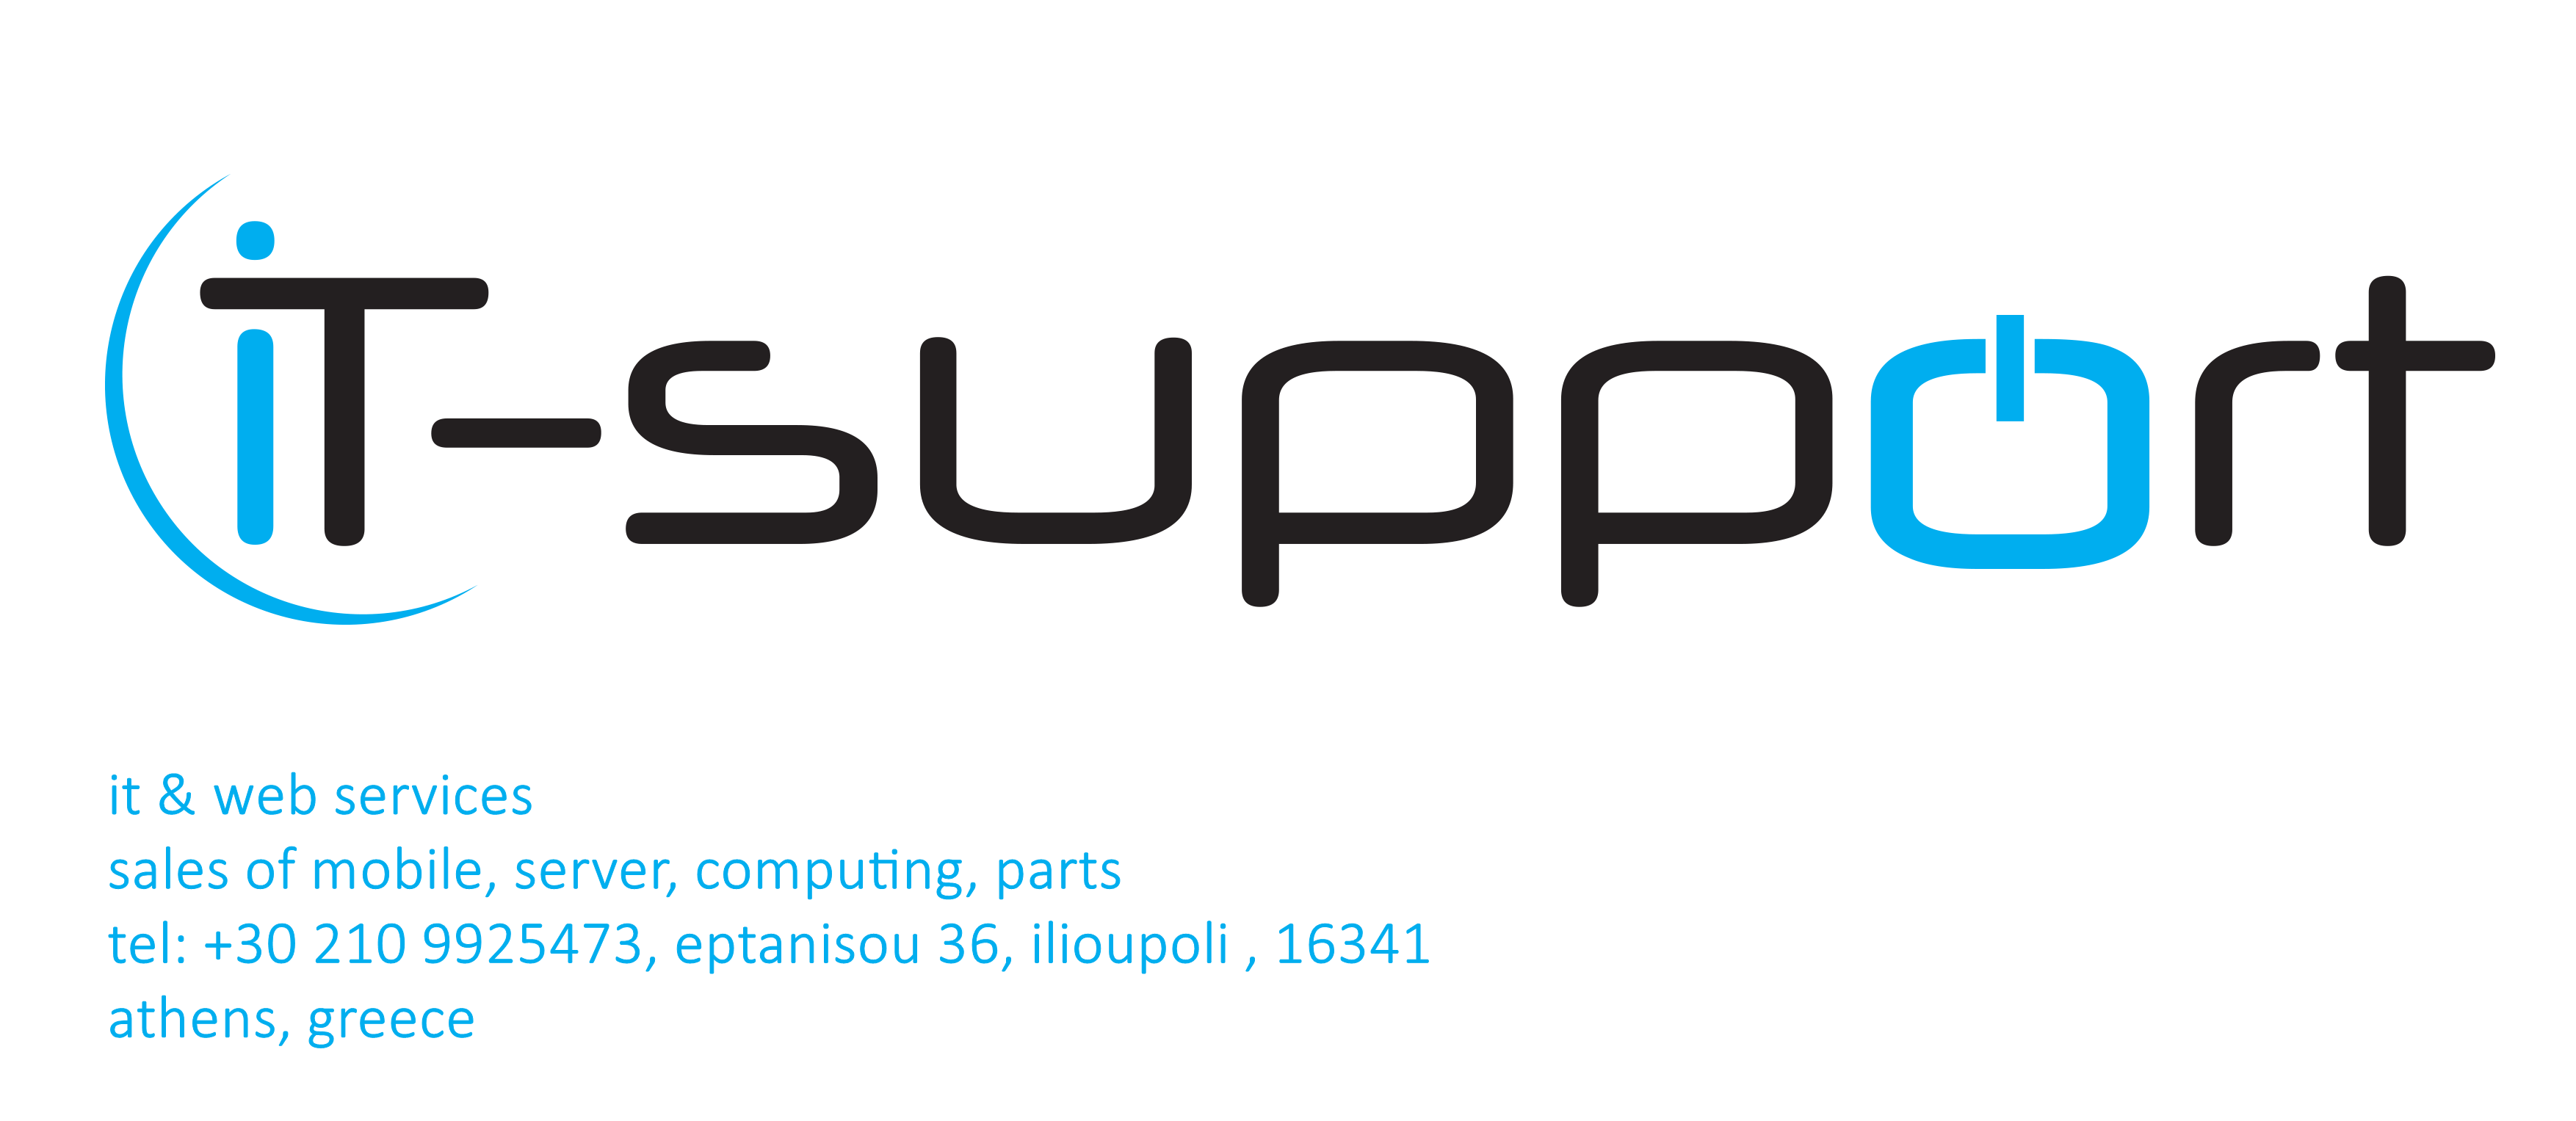 itsupport logo